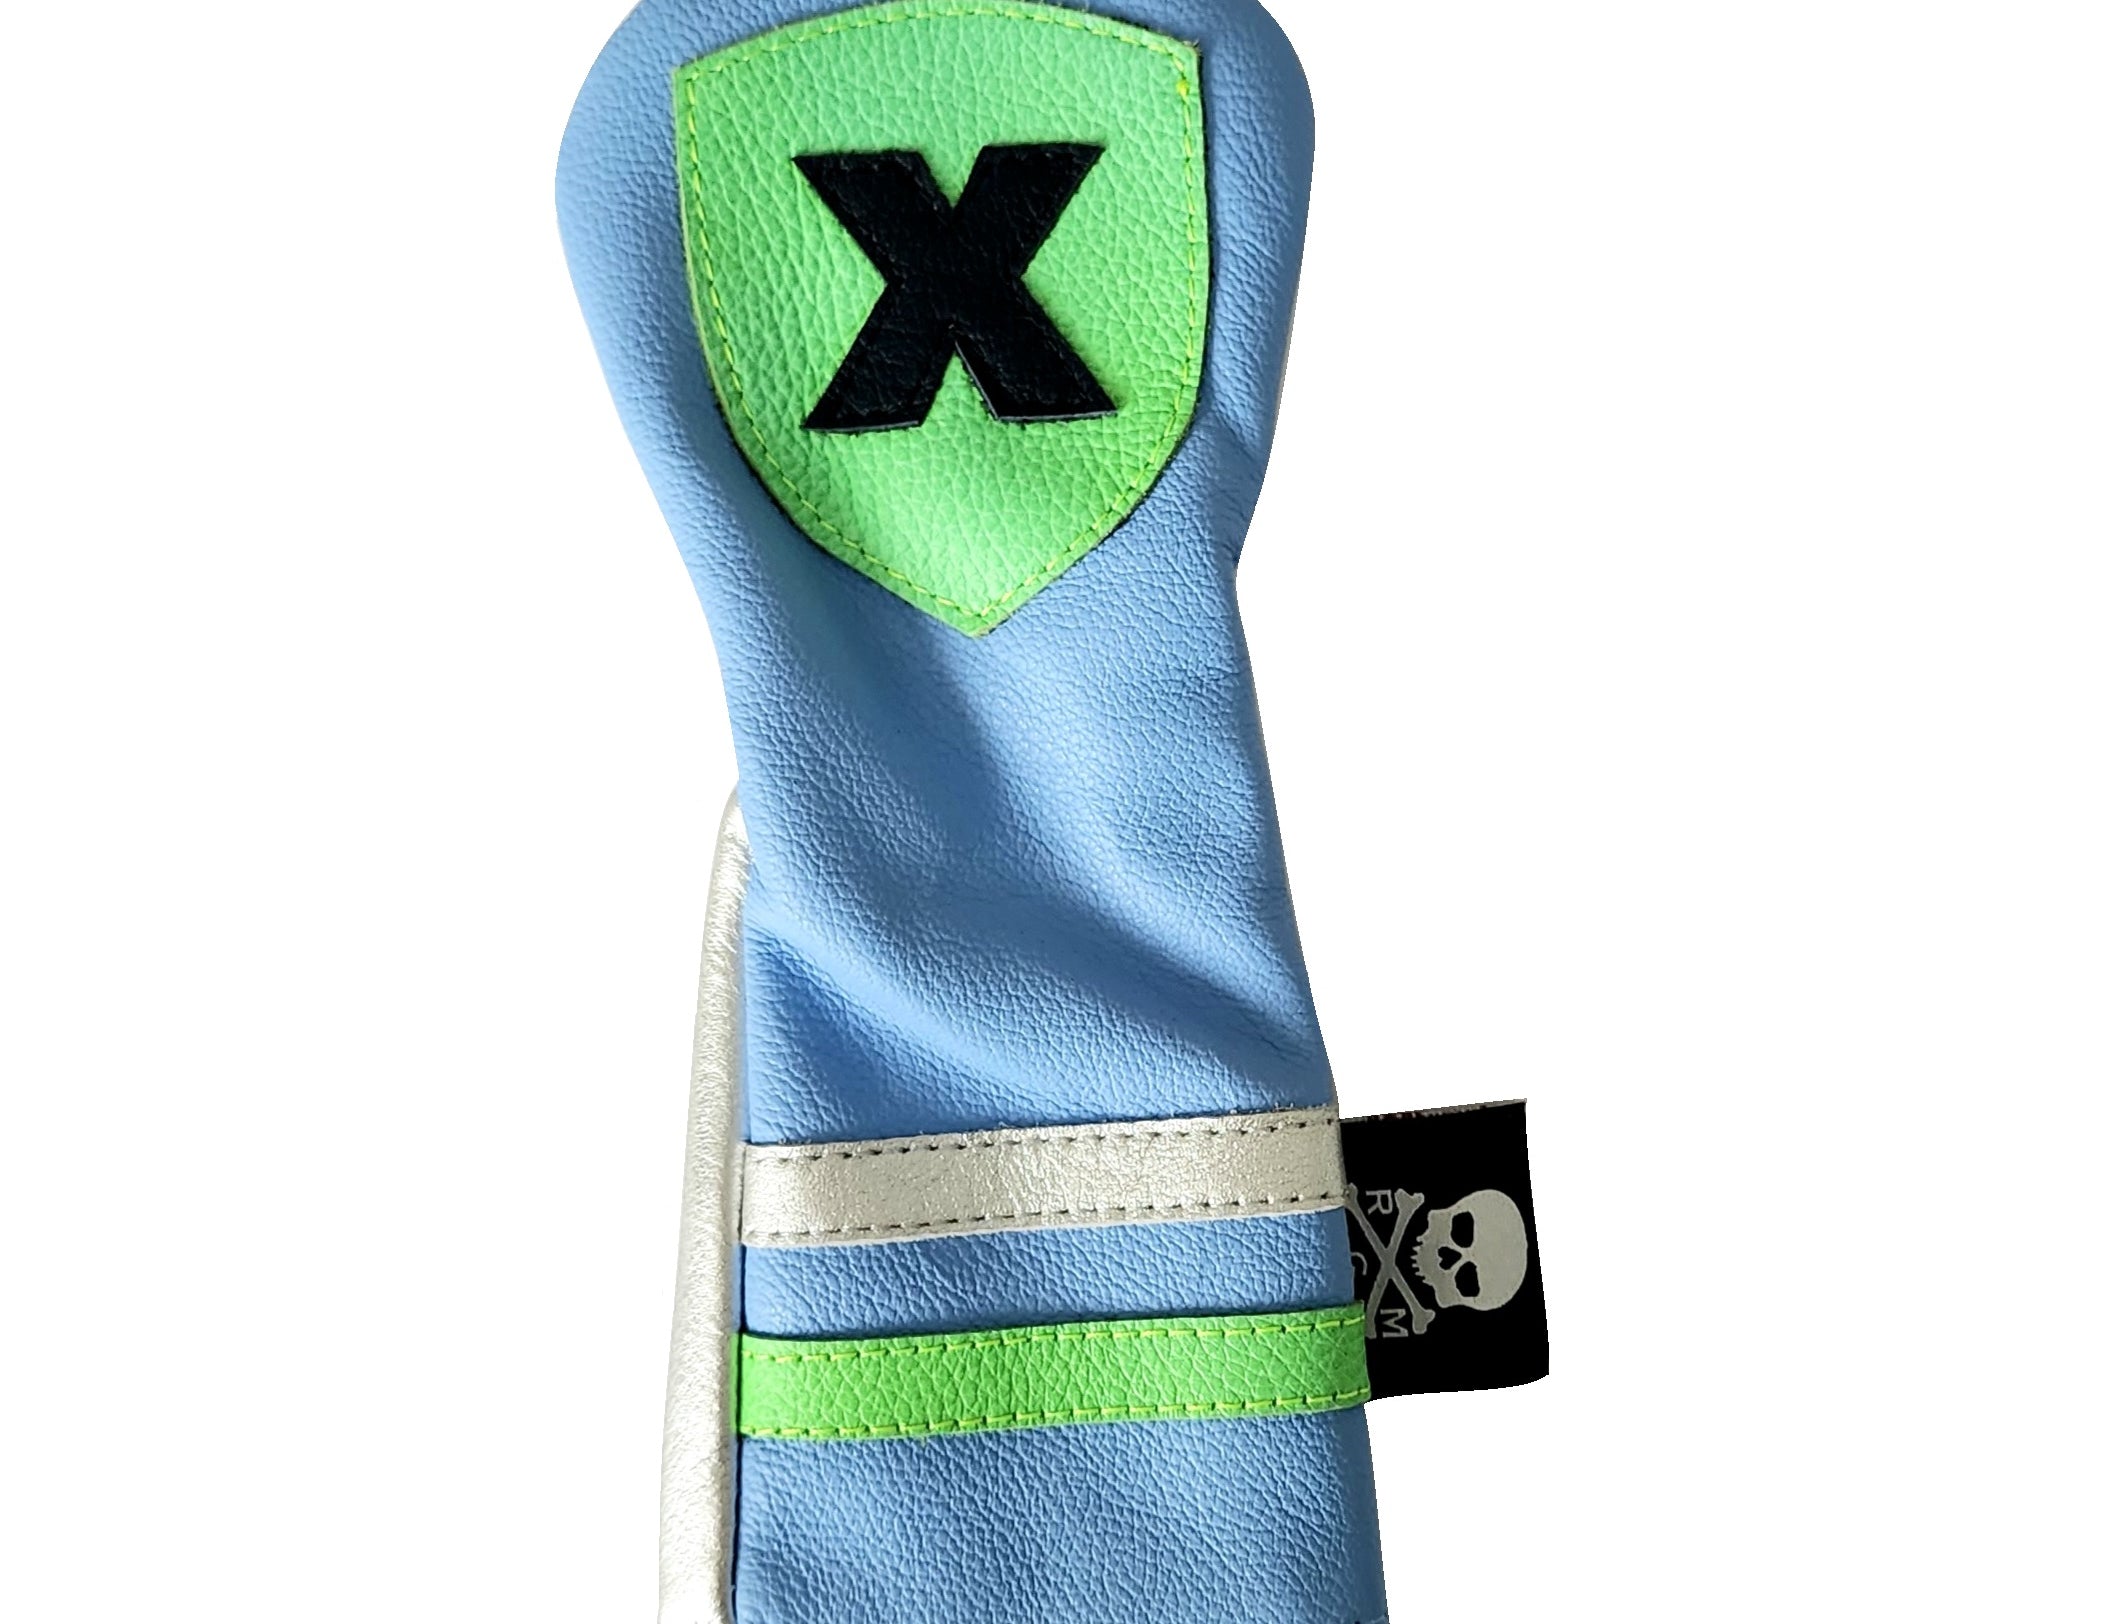 One-Of-A-Kind! Neon Green X Shield Hybrid Headcover - Robert Mark Golf